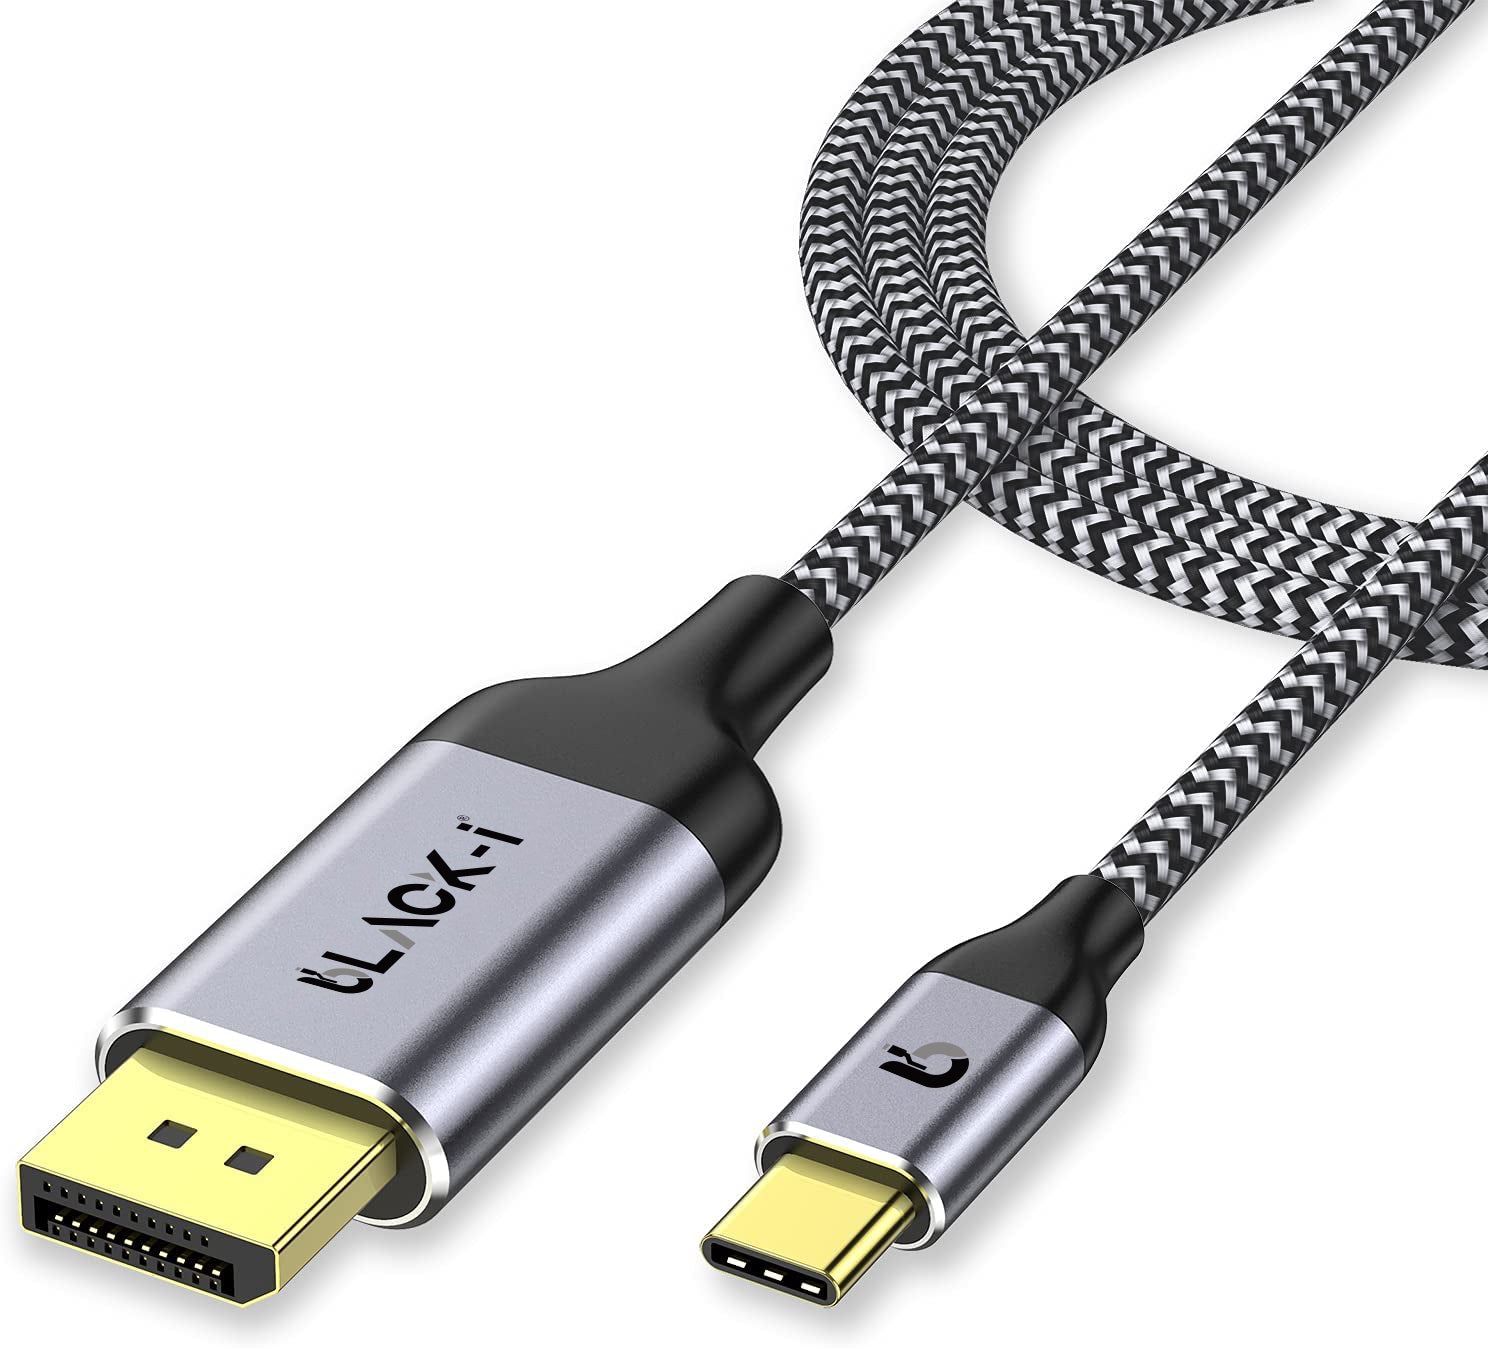 Black-i USB-C to DisplayPort 4K Cable 1.8 Meter